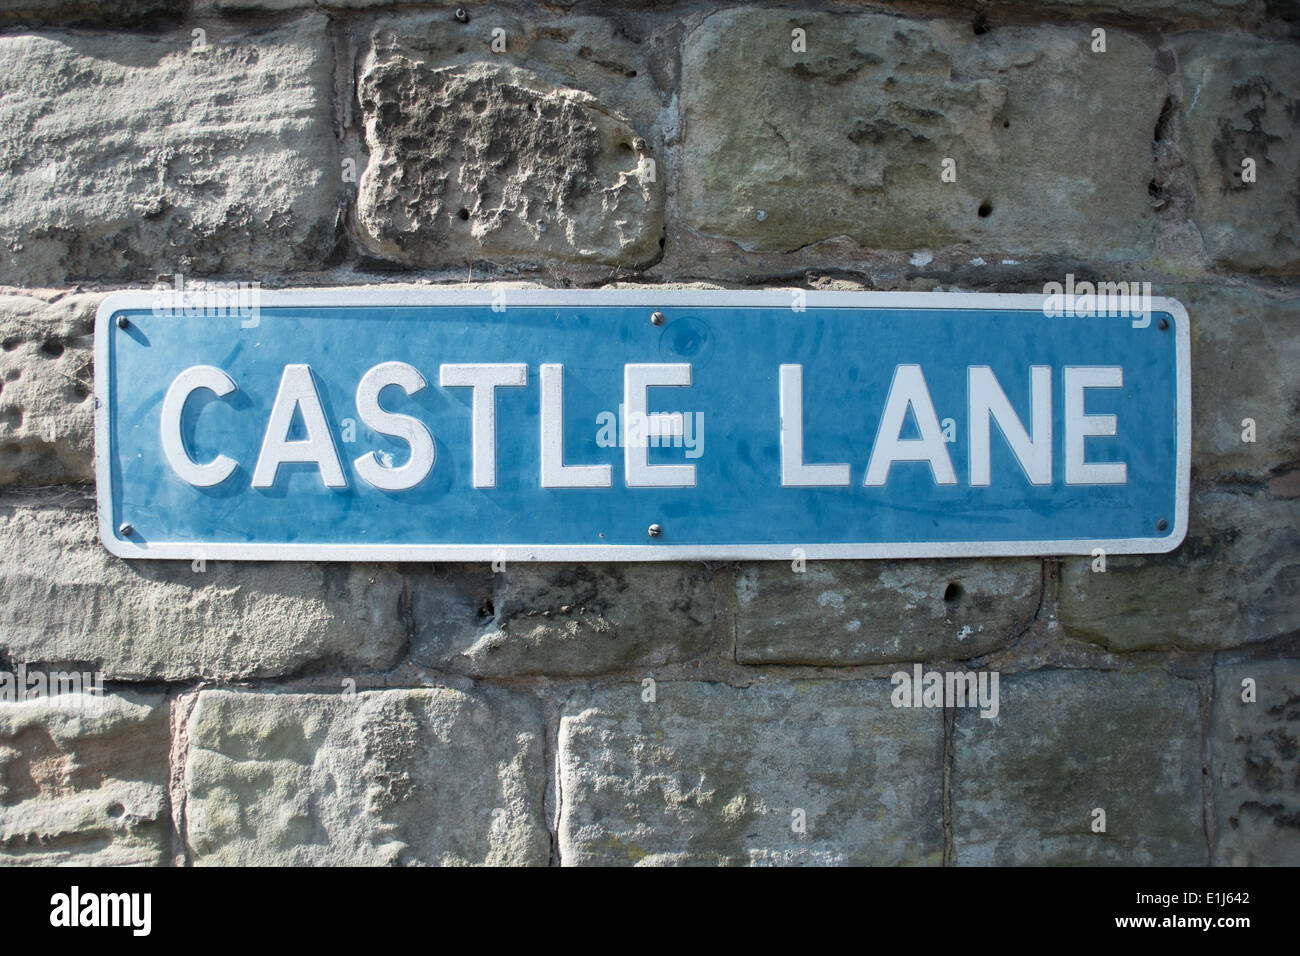 Castle Lane street sign Stock Photo